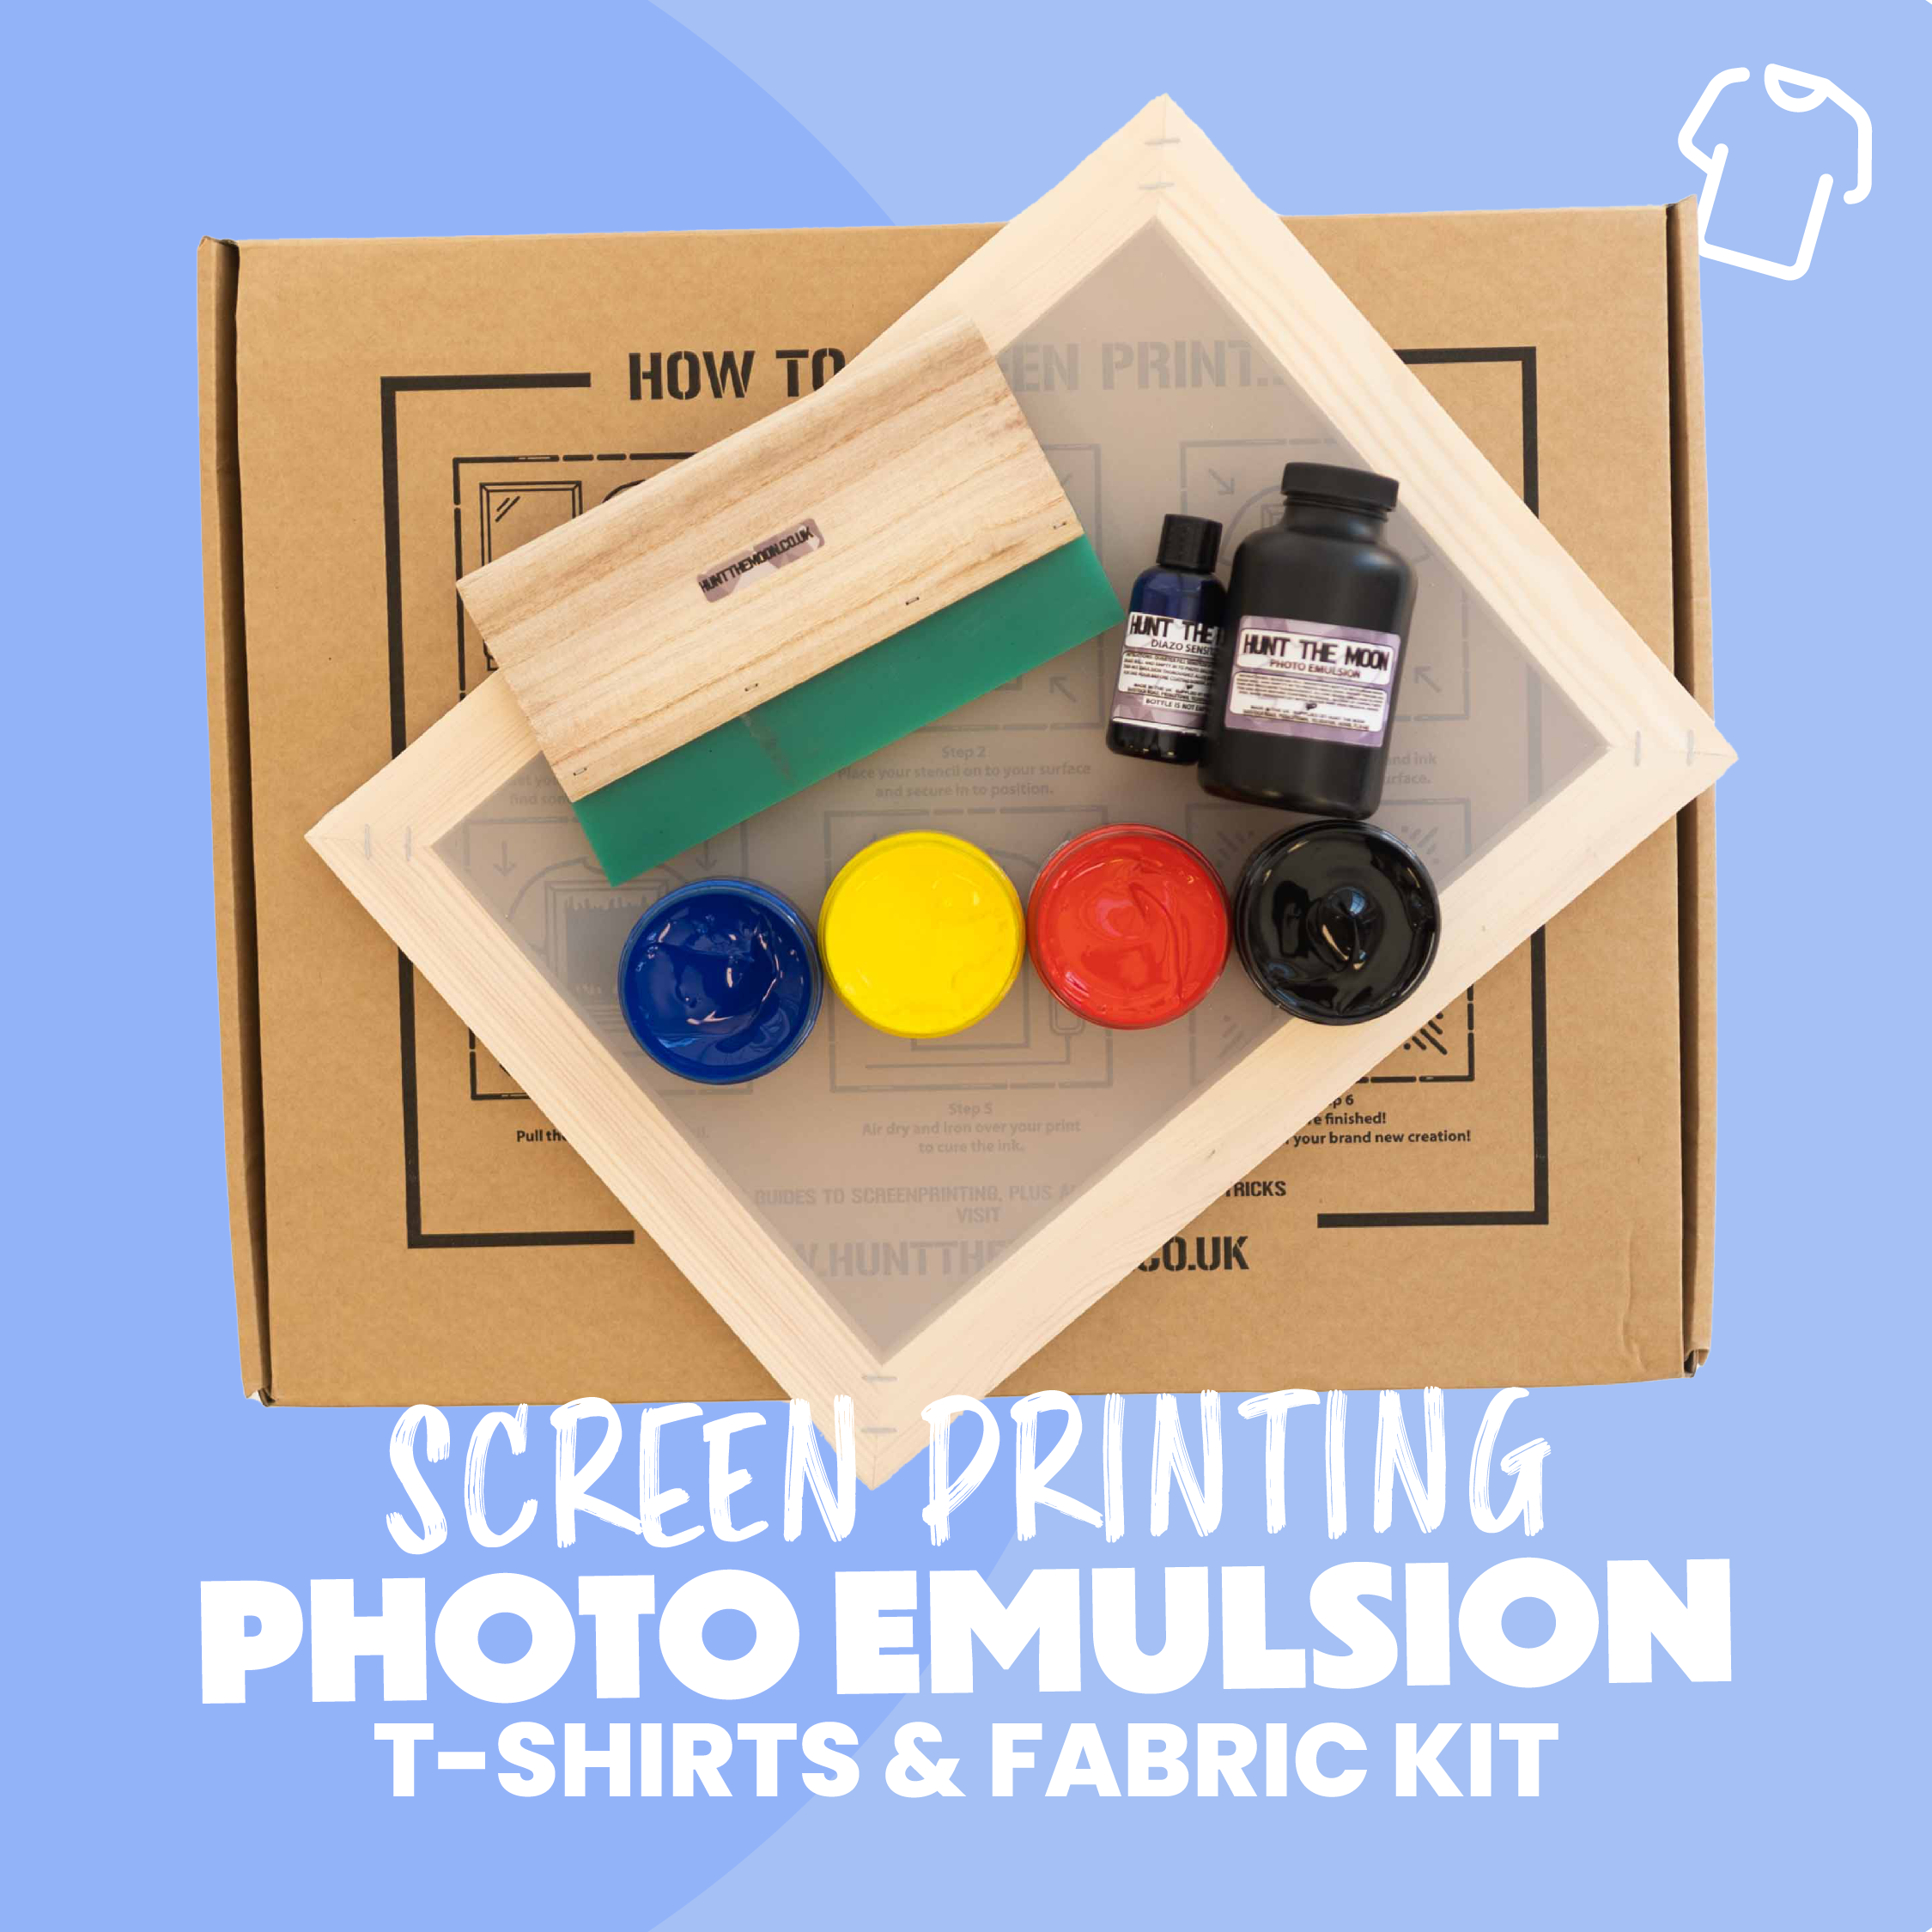 Printing Kit - All you need to print own custom t shirts